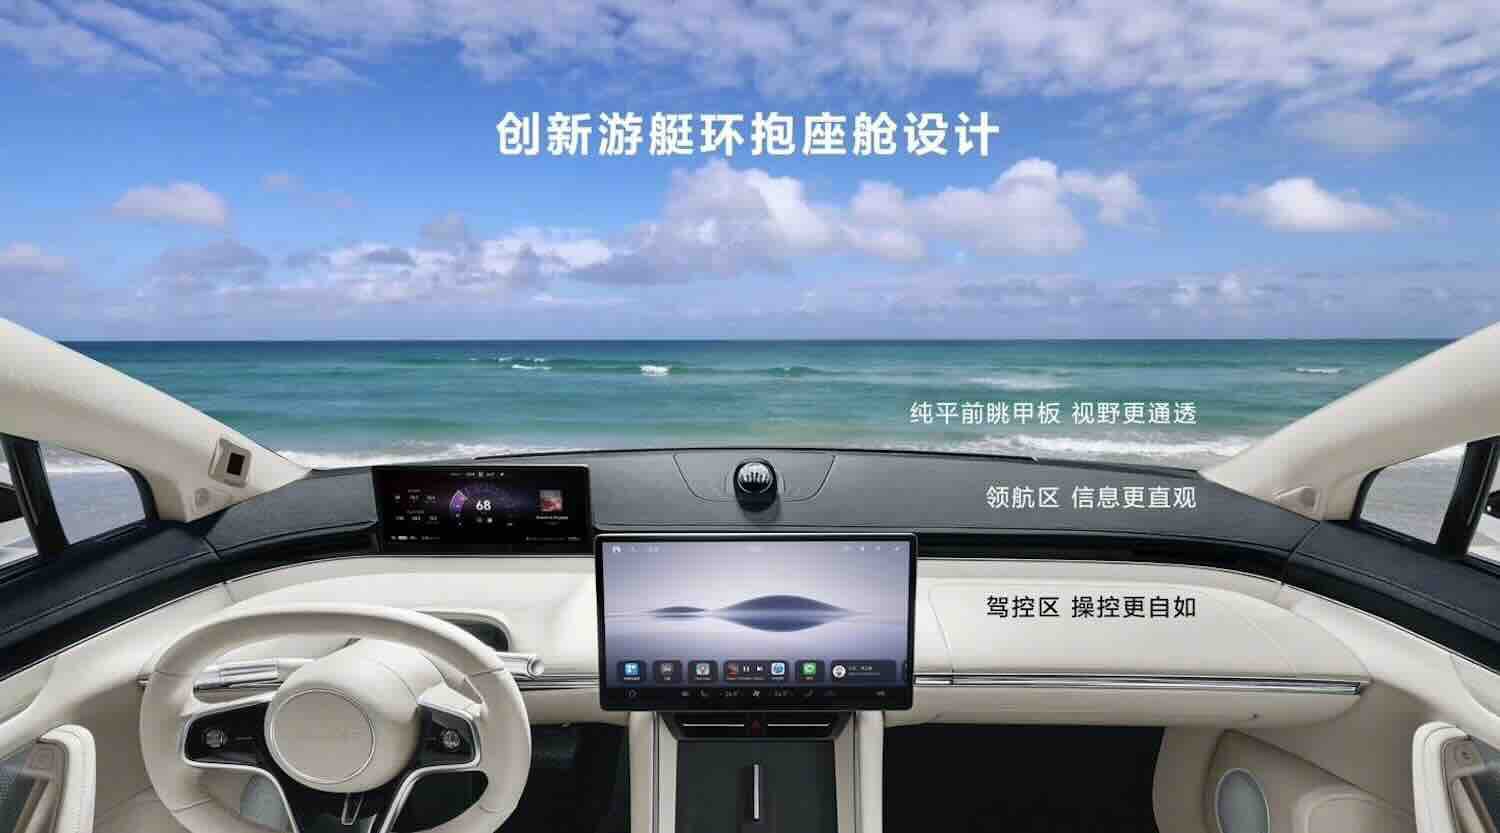 Ban-sao-noi-that-Huawei-Luxeed-S7.jpeg